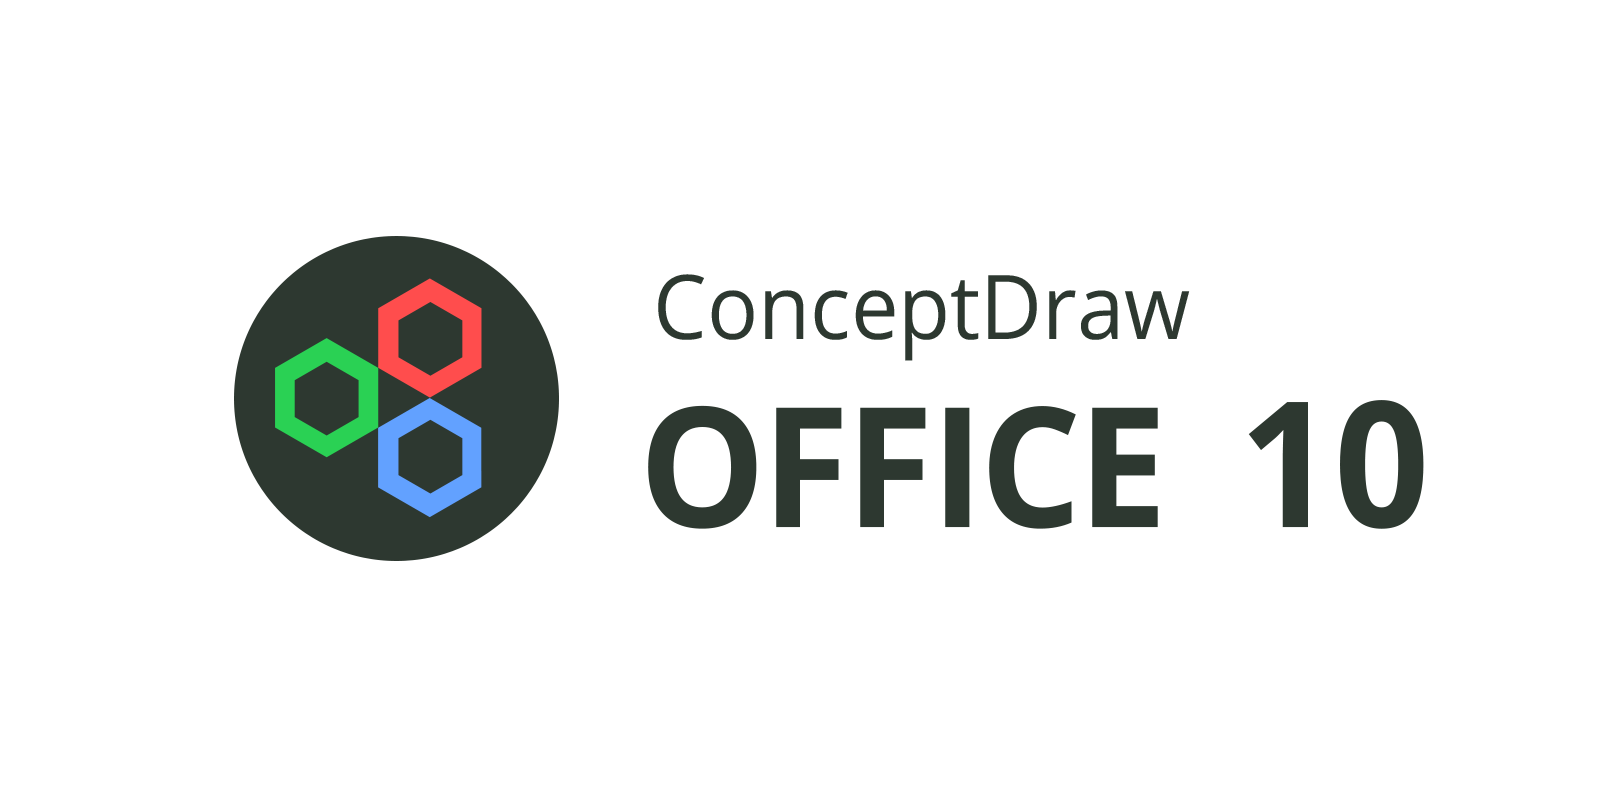 ConceptDraw OFFICE logo